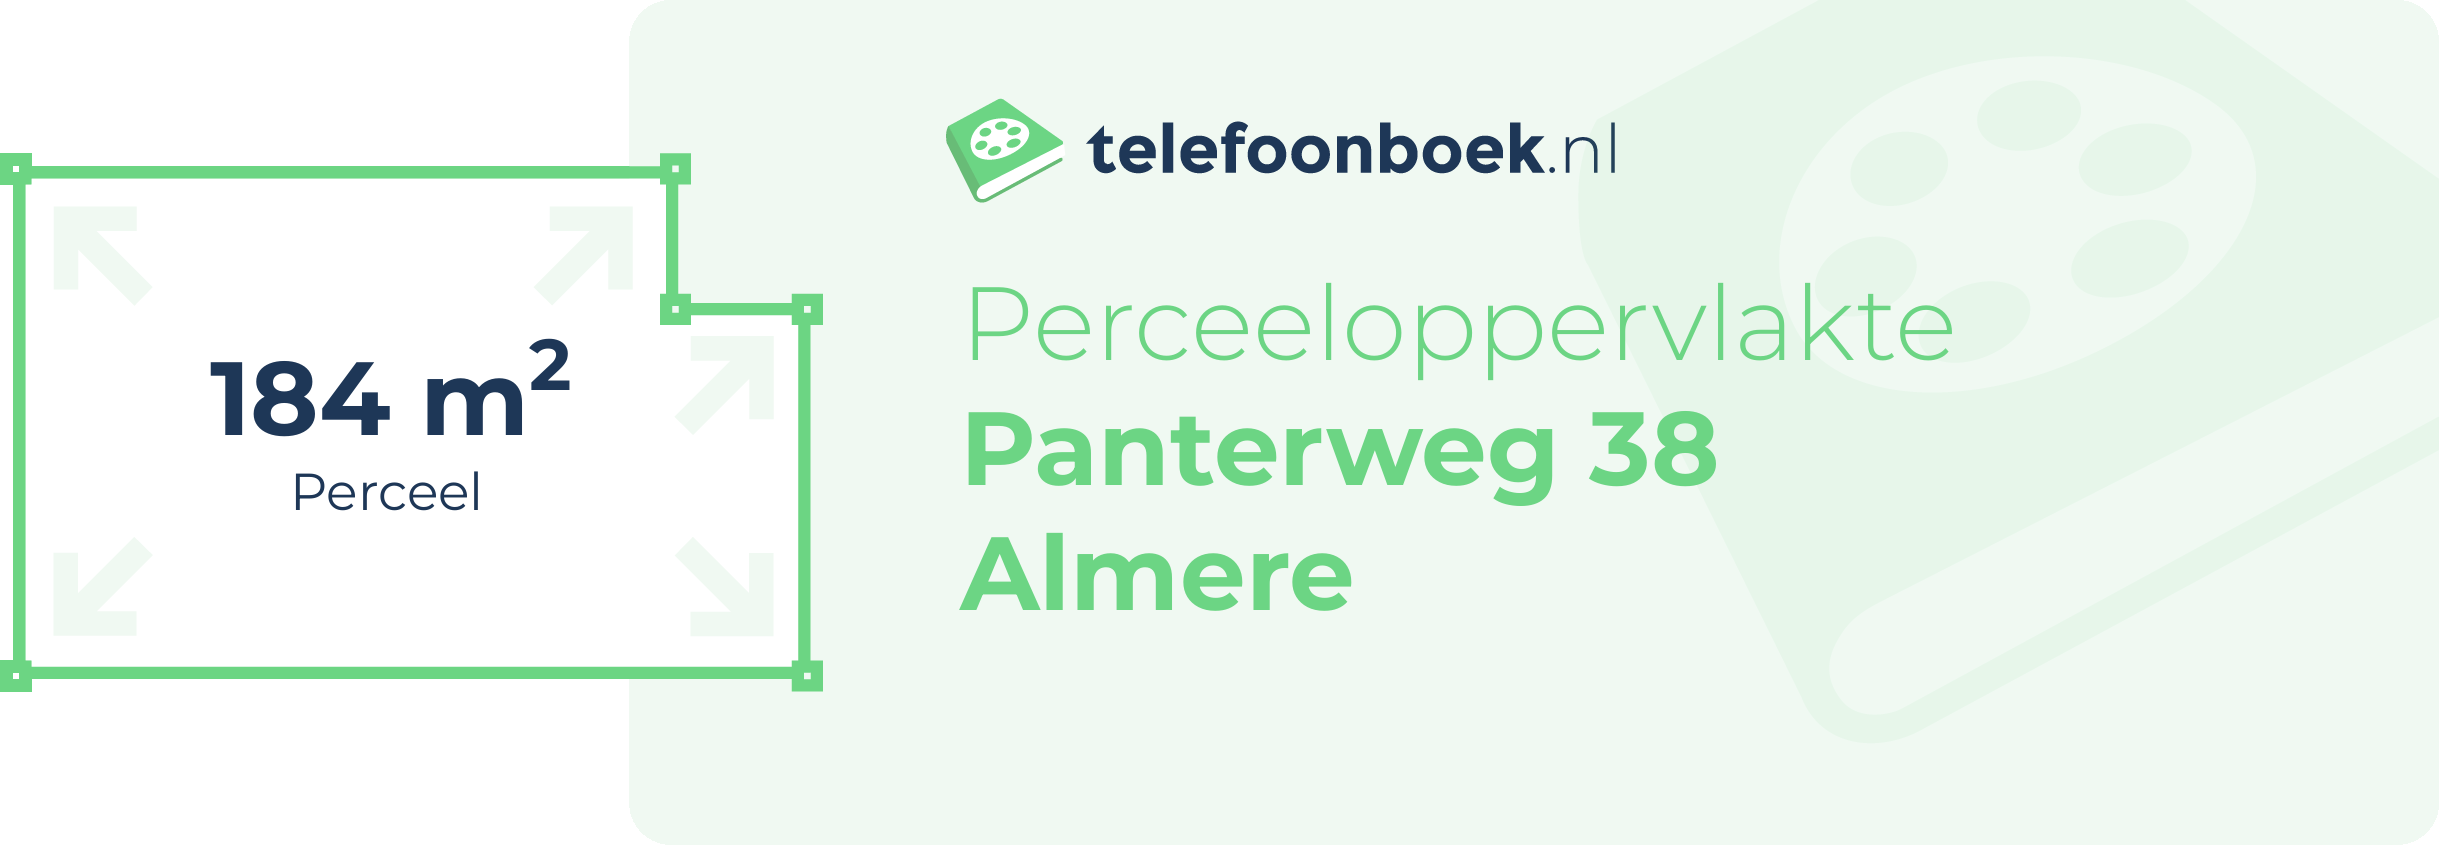 Perceeloppervlakte Panterweg 38 Almere